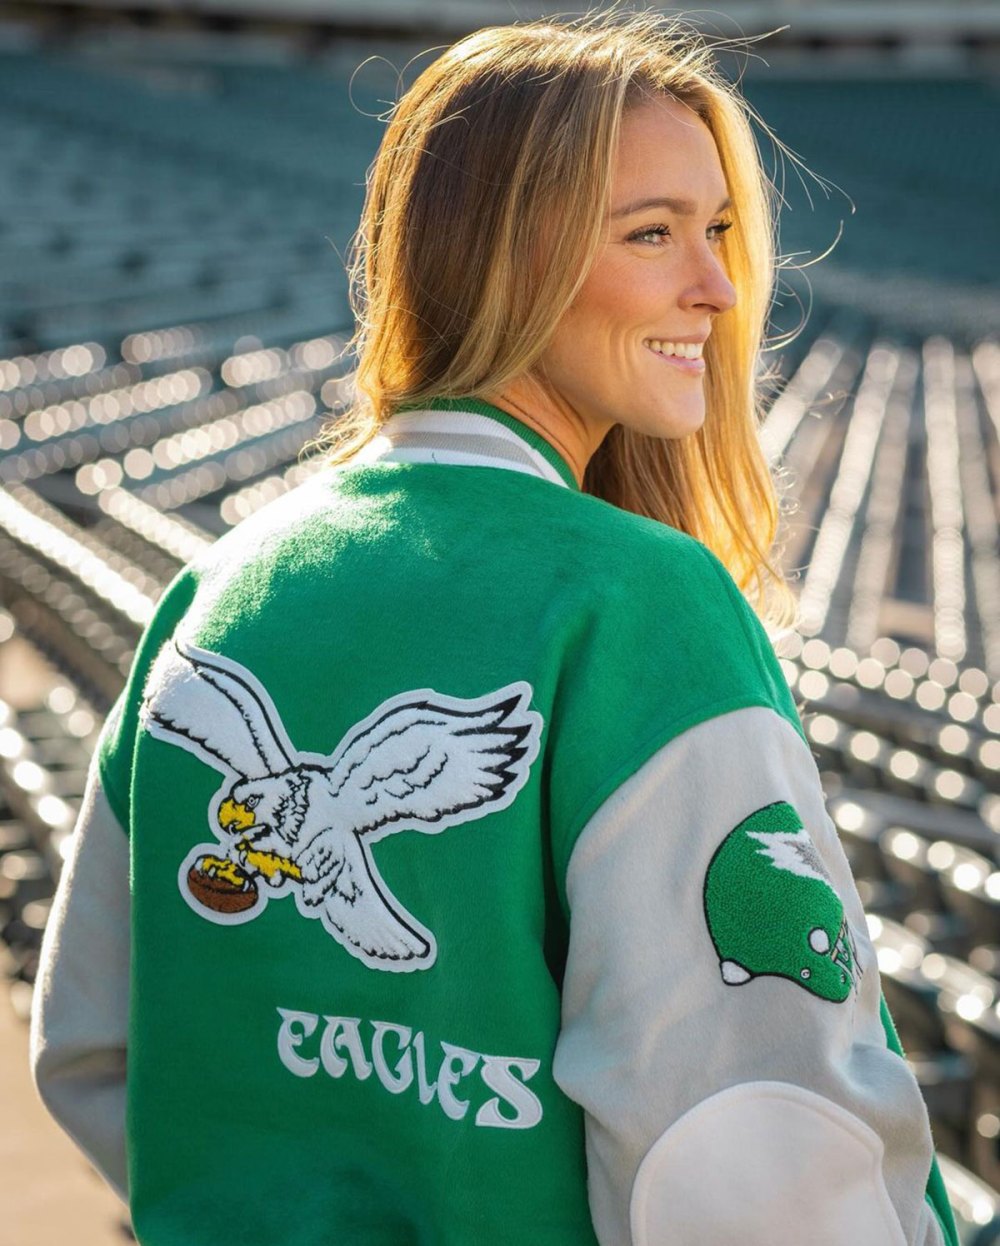 Winner of Kylie Kelce Signed Eagles Jacket Revealed Kaitlin Olson Outbid Husband Rob McElhenney on Signed Eagles Jacket